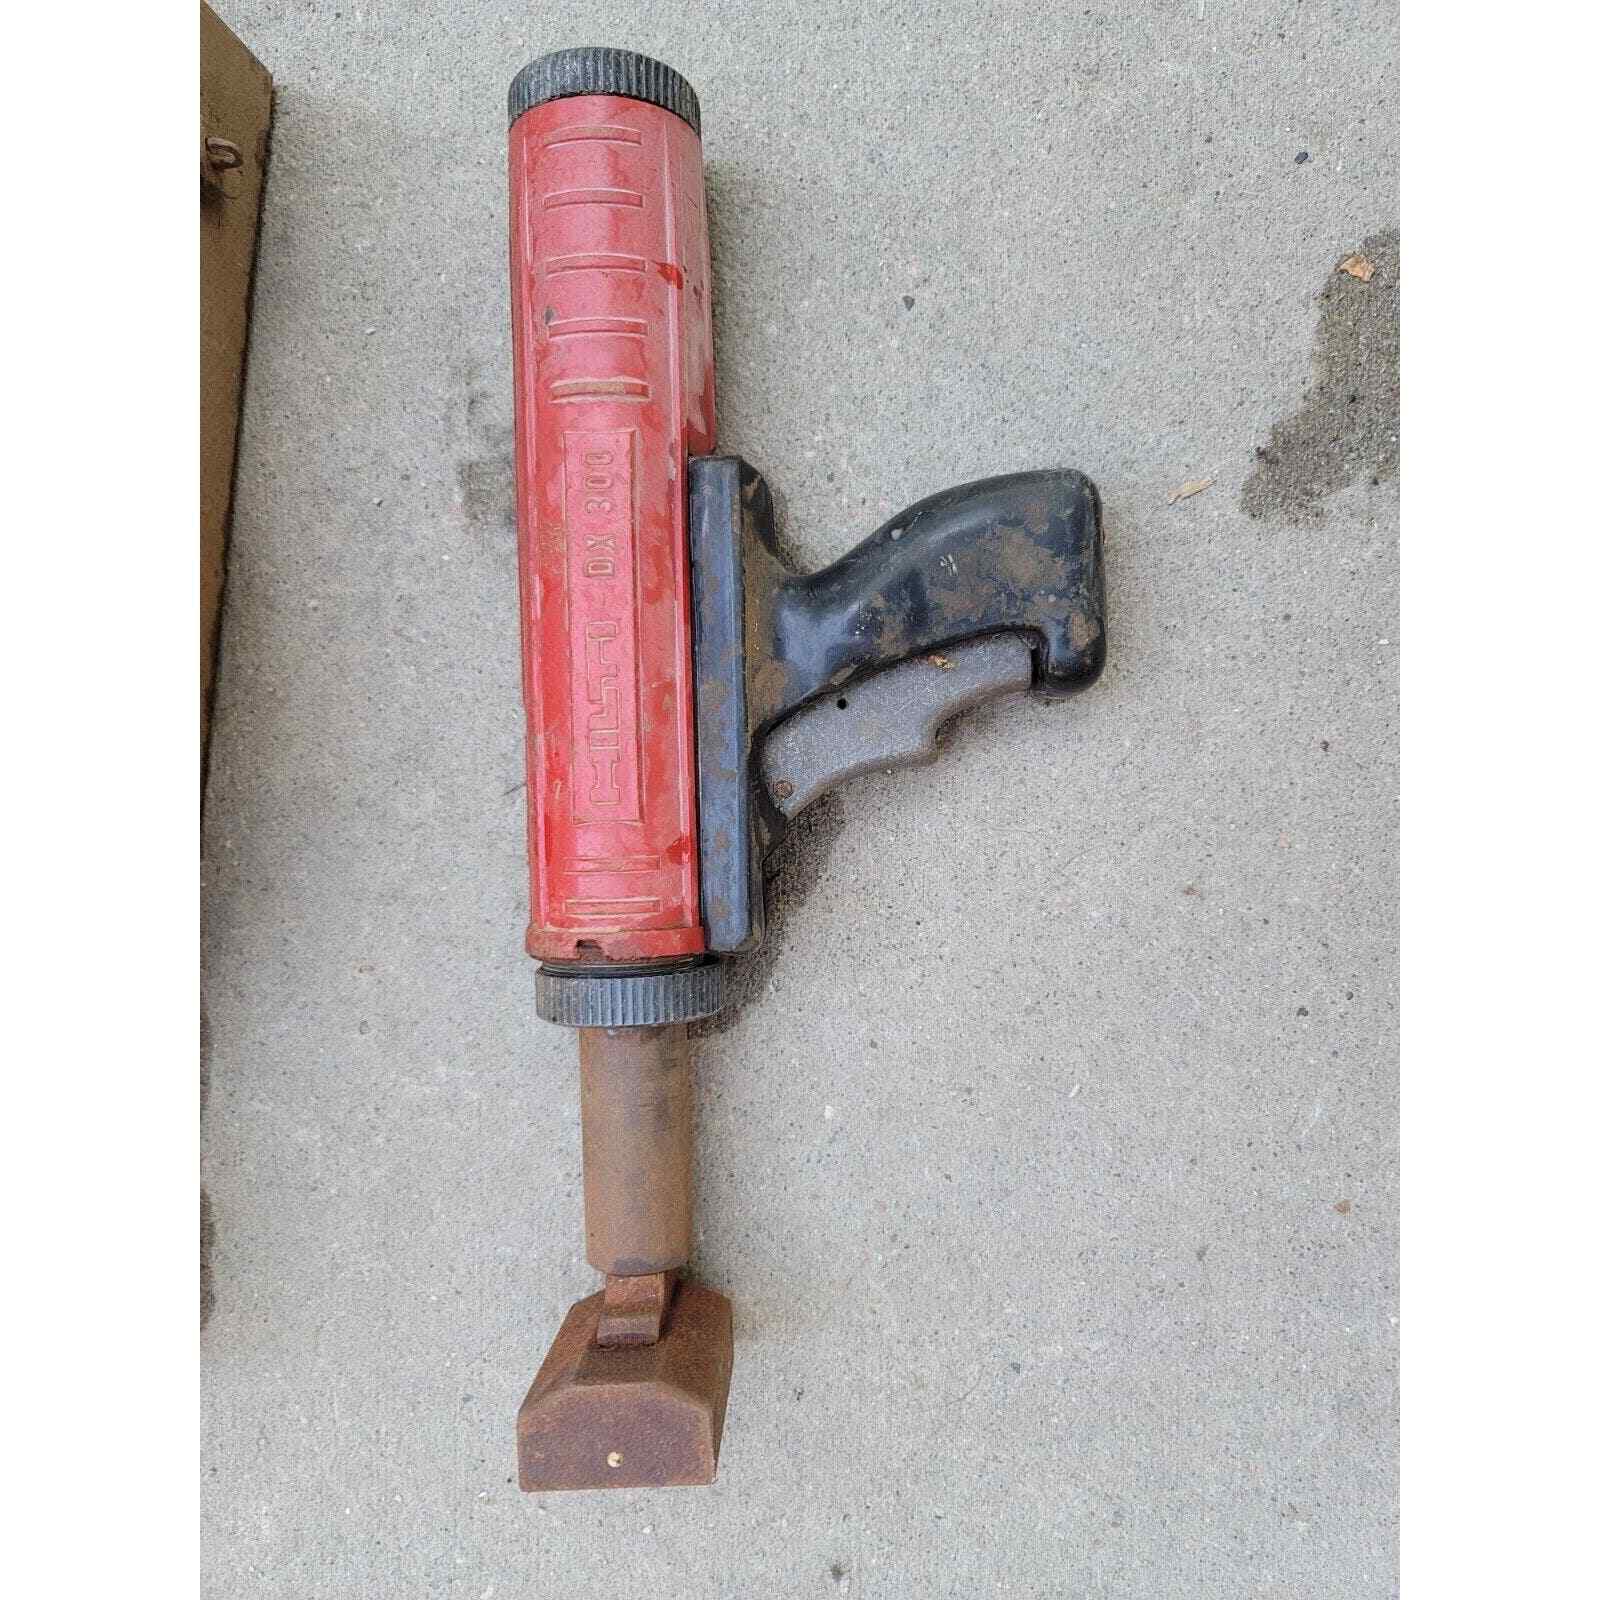 Hilti rusty Powder Actuated Tool w/ Steel Case